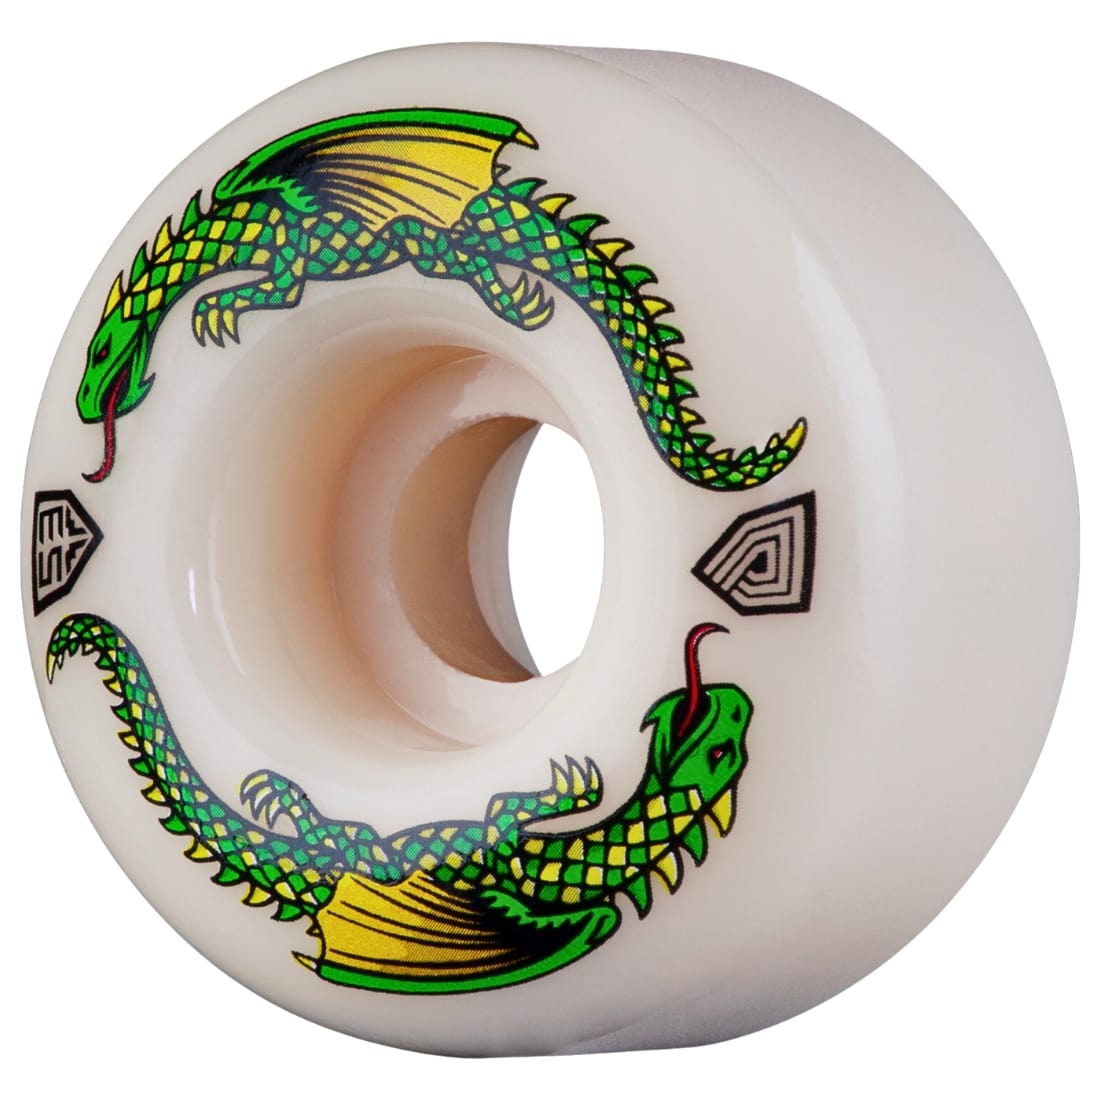 Powell Peralta 53mm 93A Dragon Wheels Skateboard Wheels - Off White